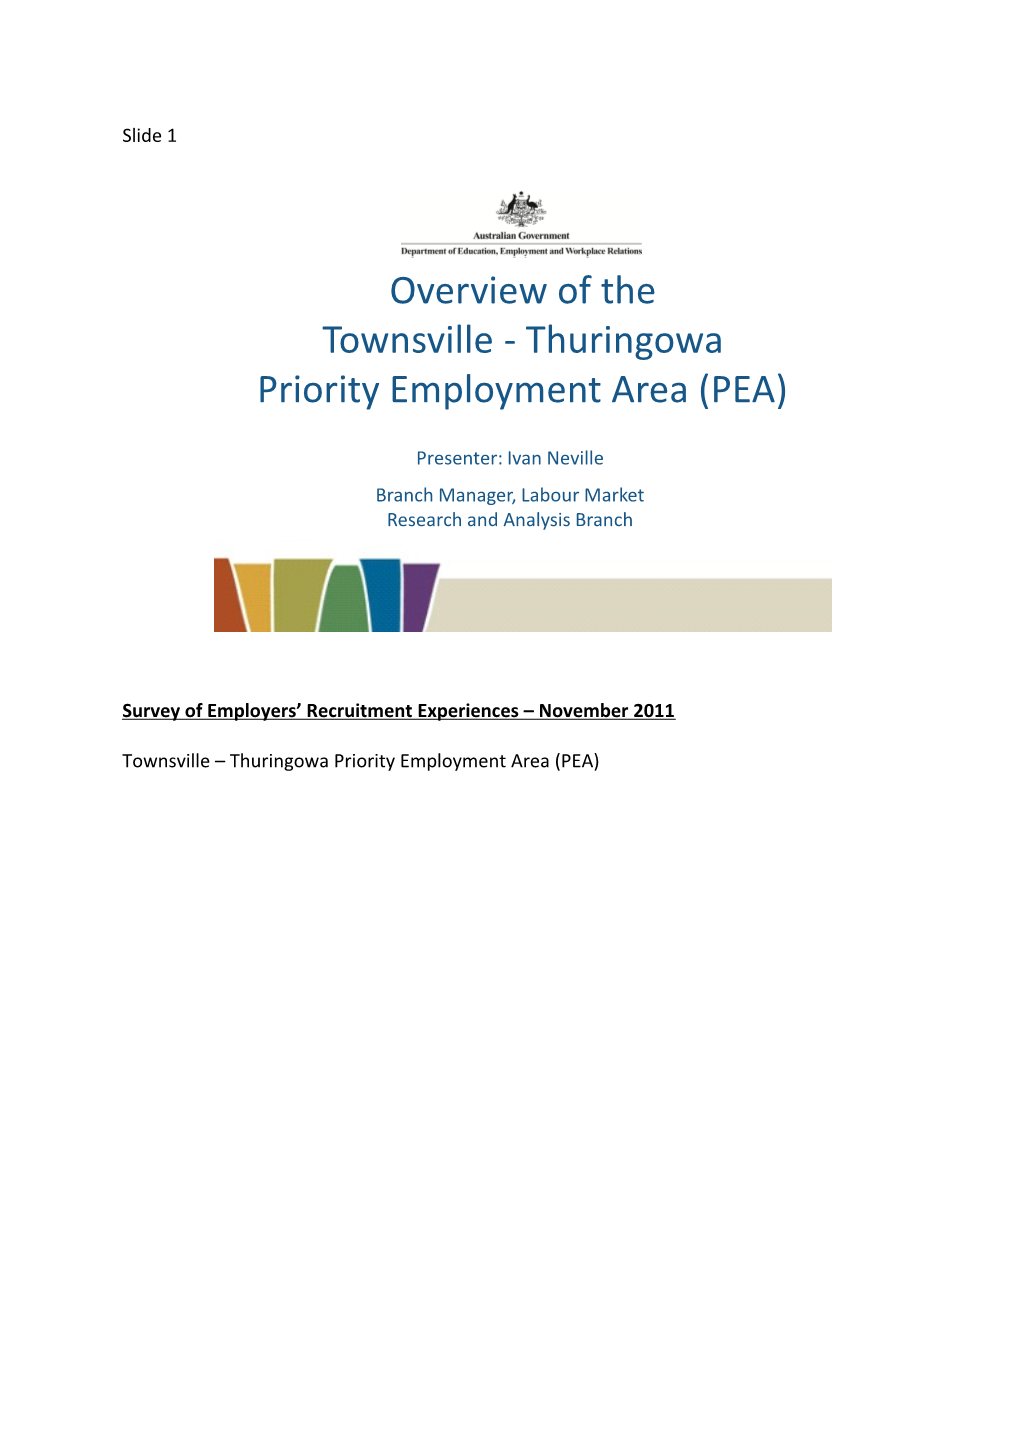 Survey of Employers Recruitment Experiences November 2011